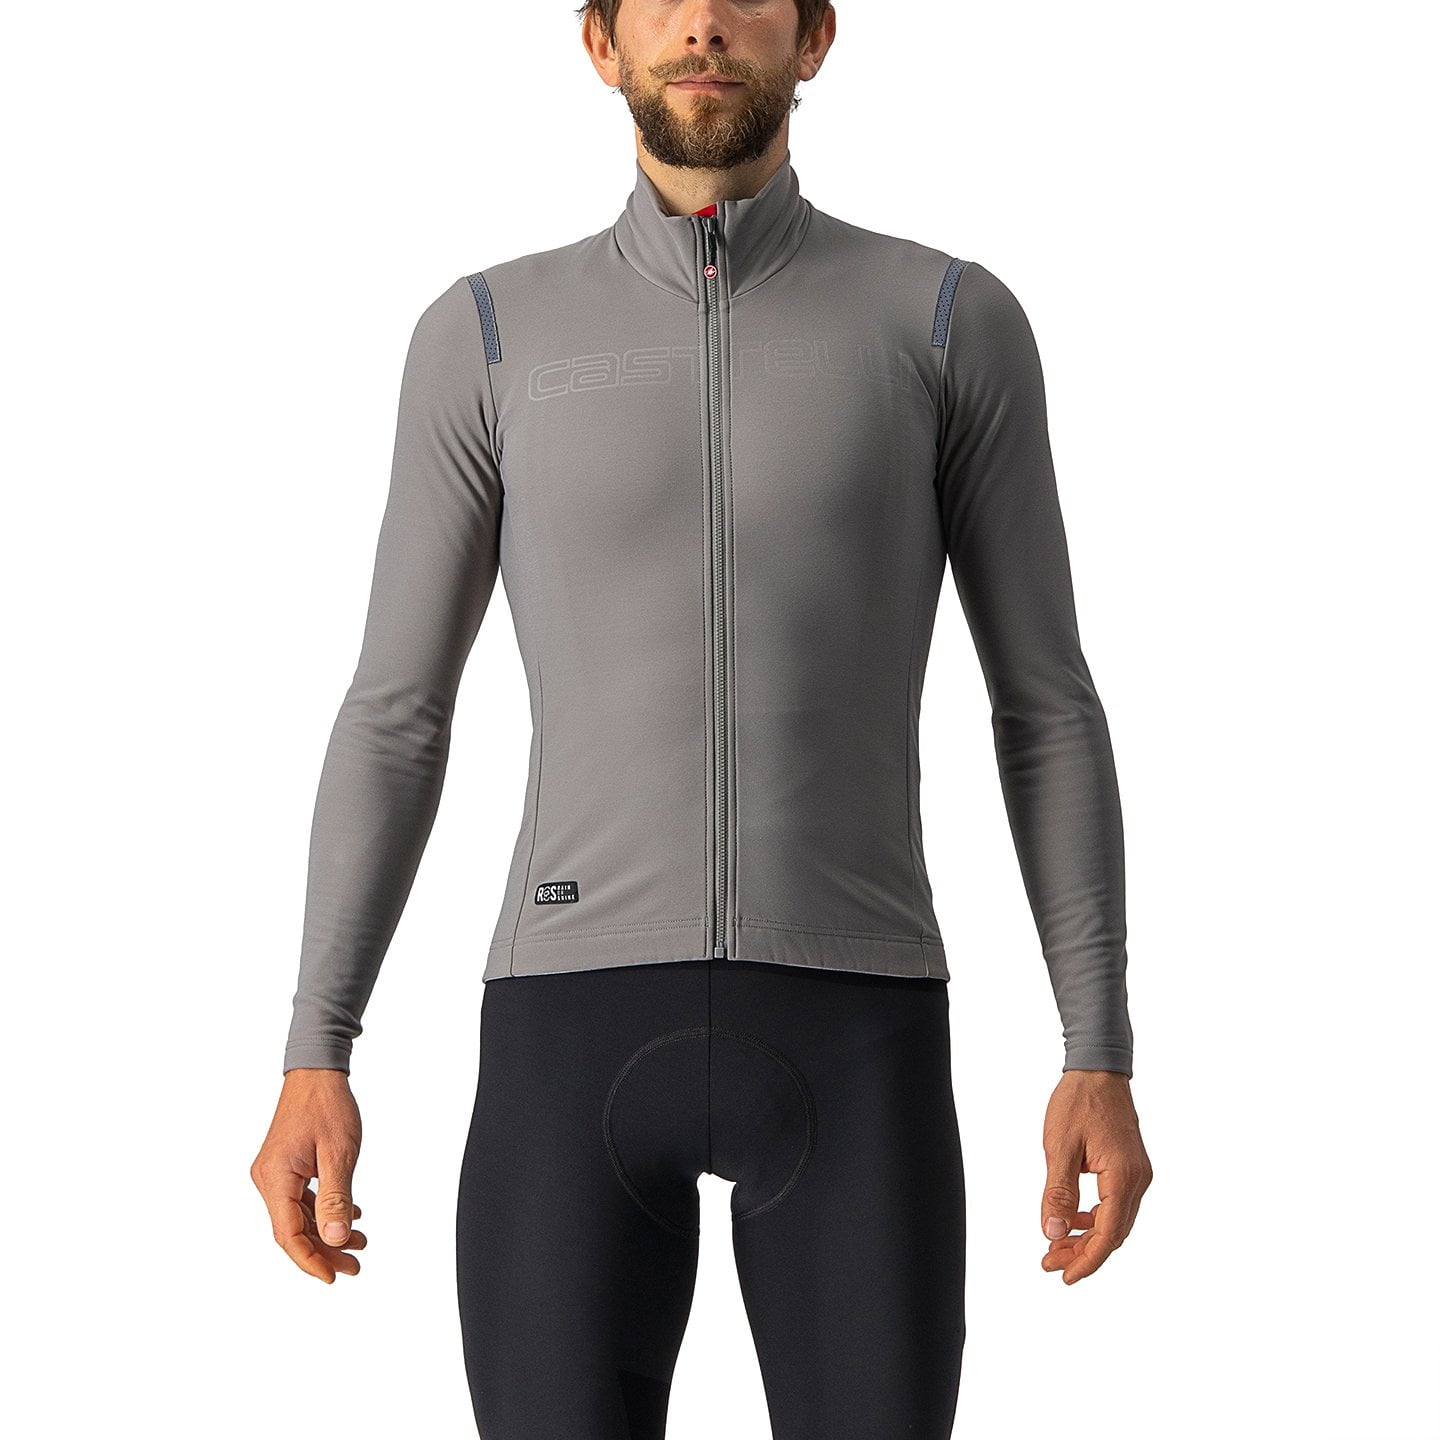 CASTELLI Tutto Nano RoS Light Jacket Jersey / Jacket, for men, size XL, Bike jacket, Cycle gear